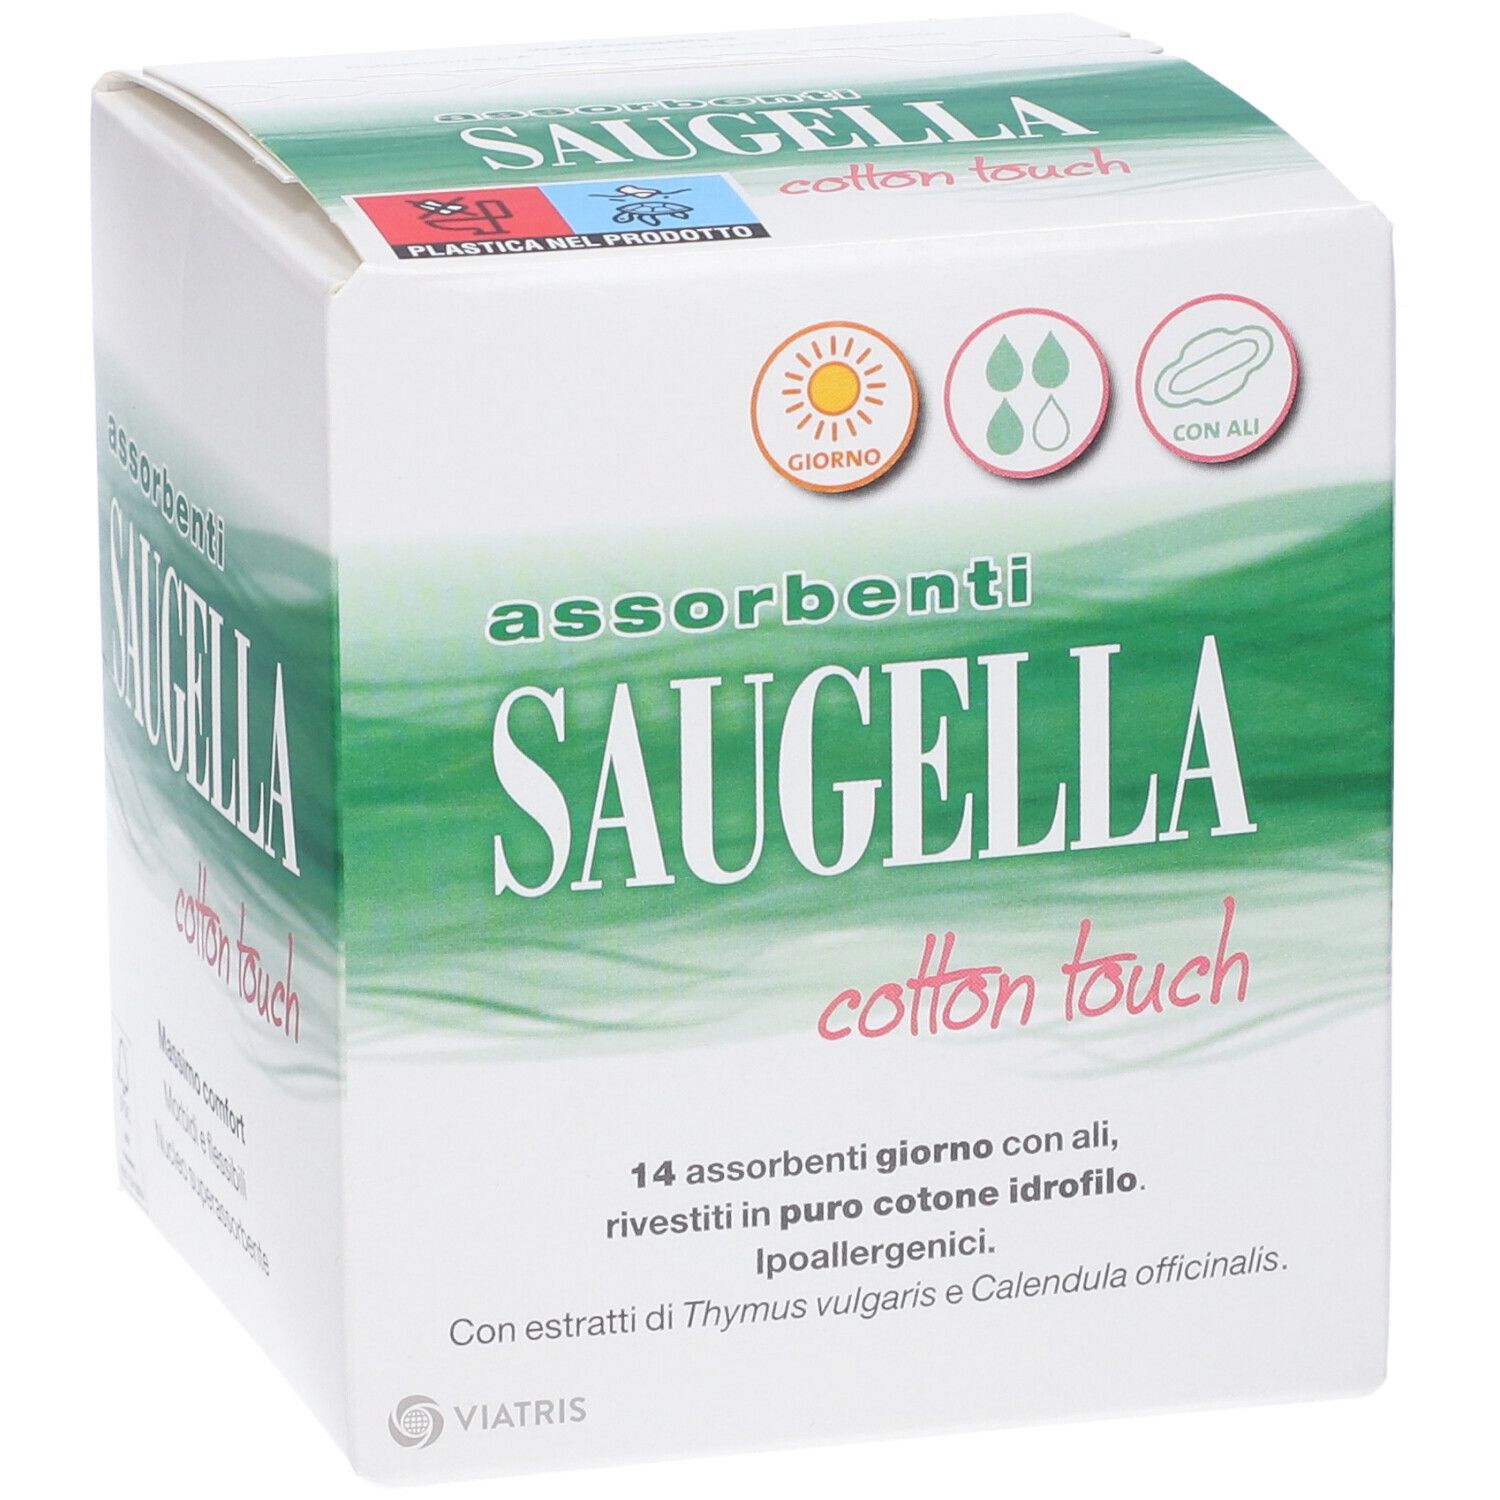 SAUGELLA Cotton Touch